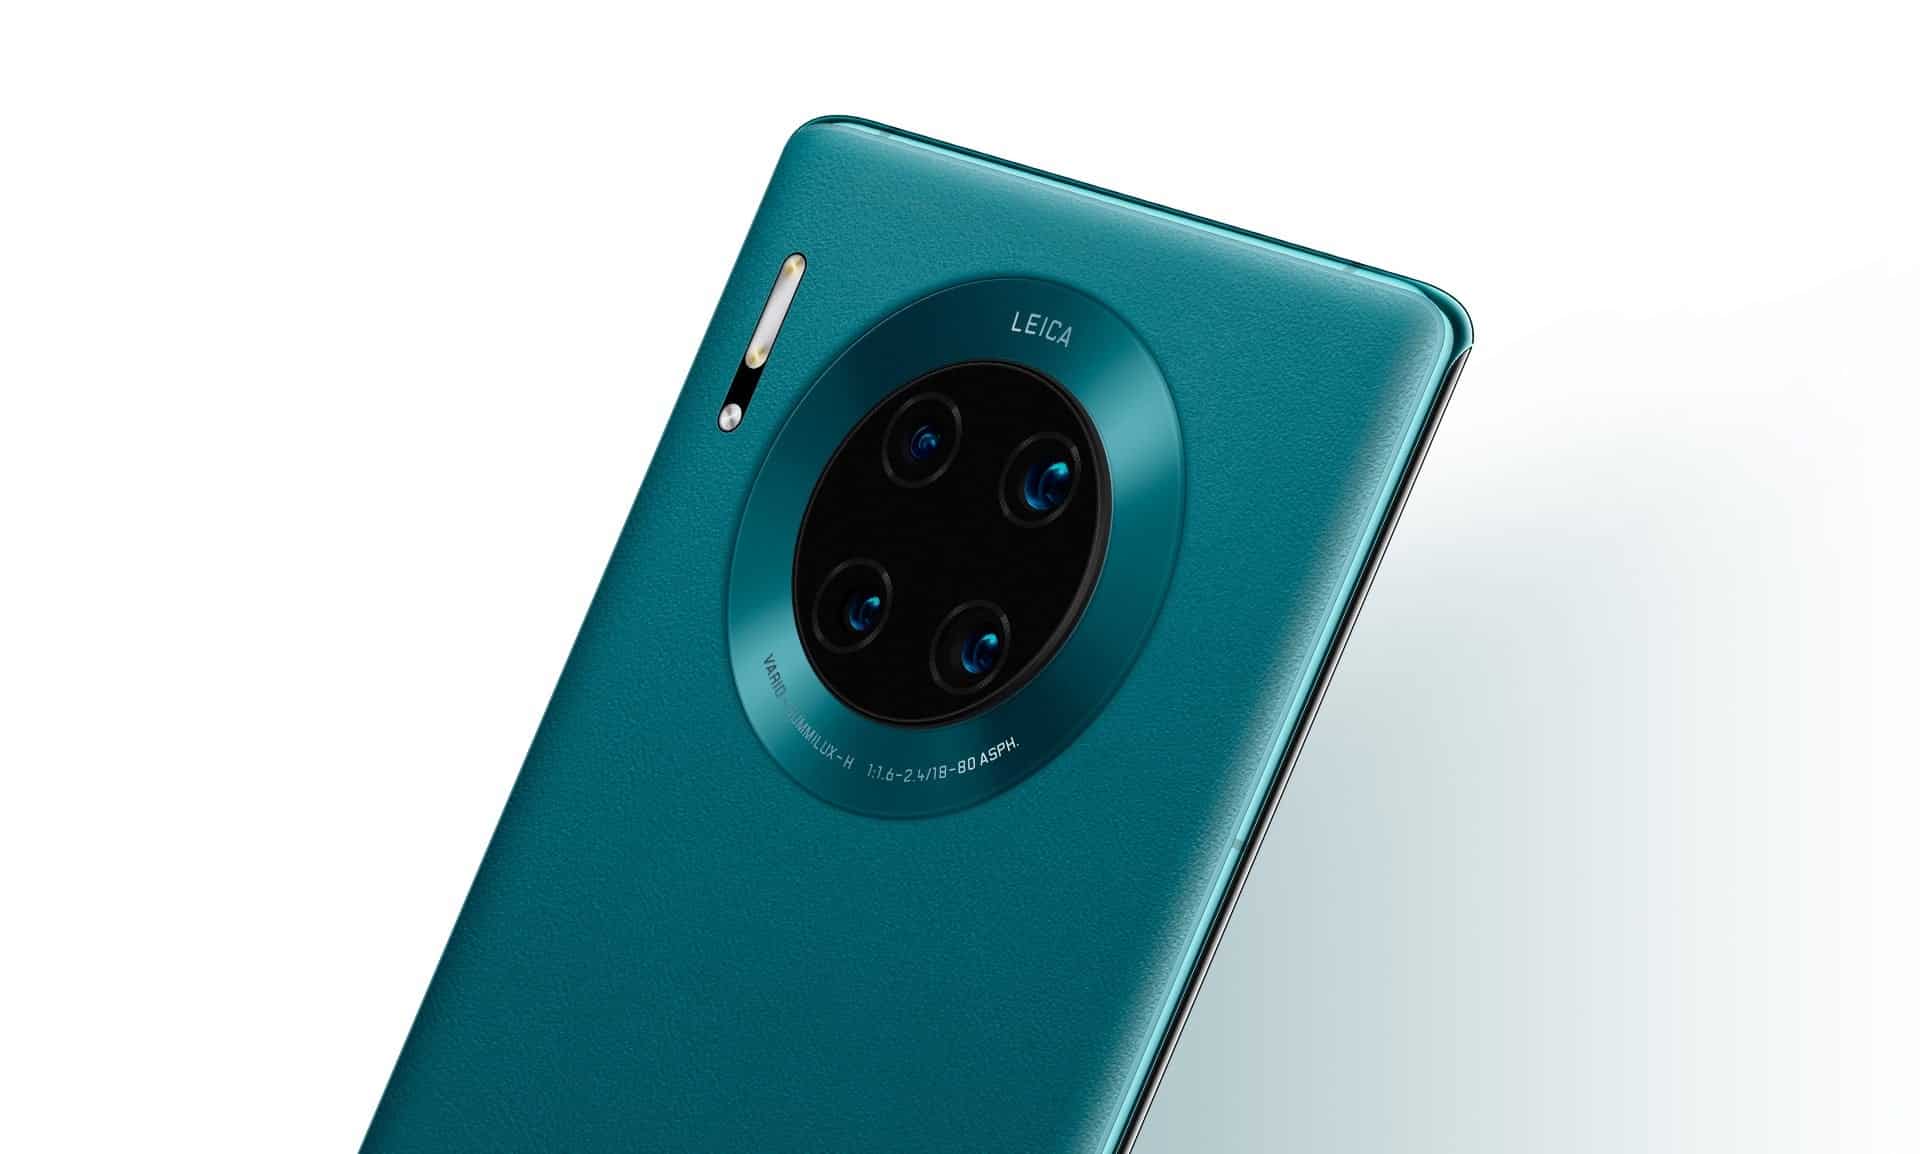 Best Camera Phones of 2019, According to DxOMark